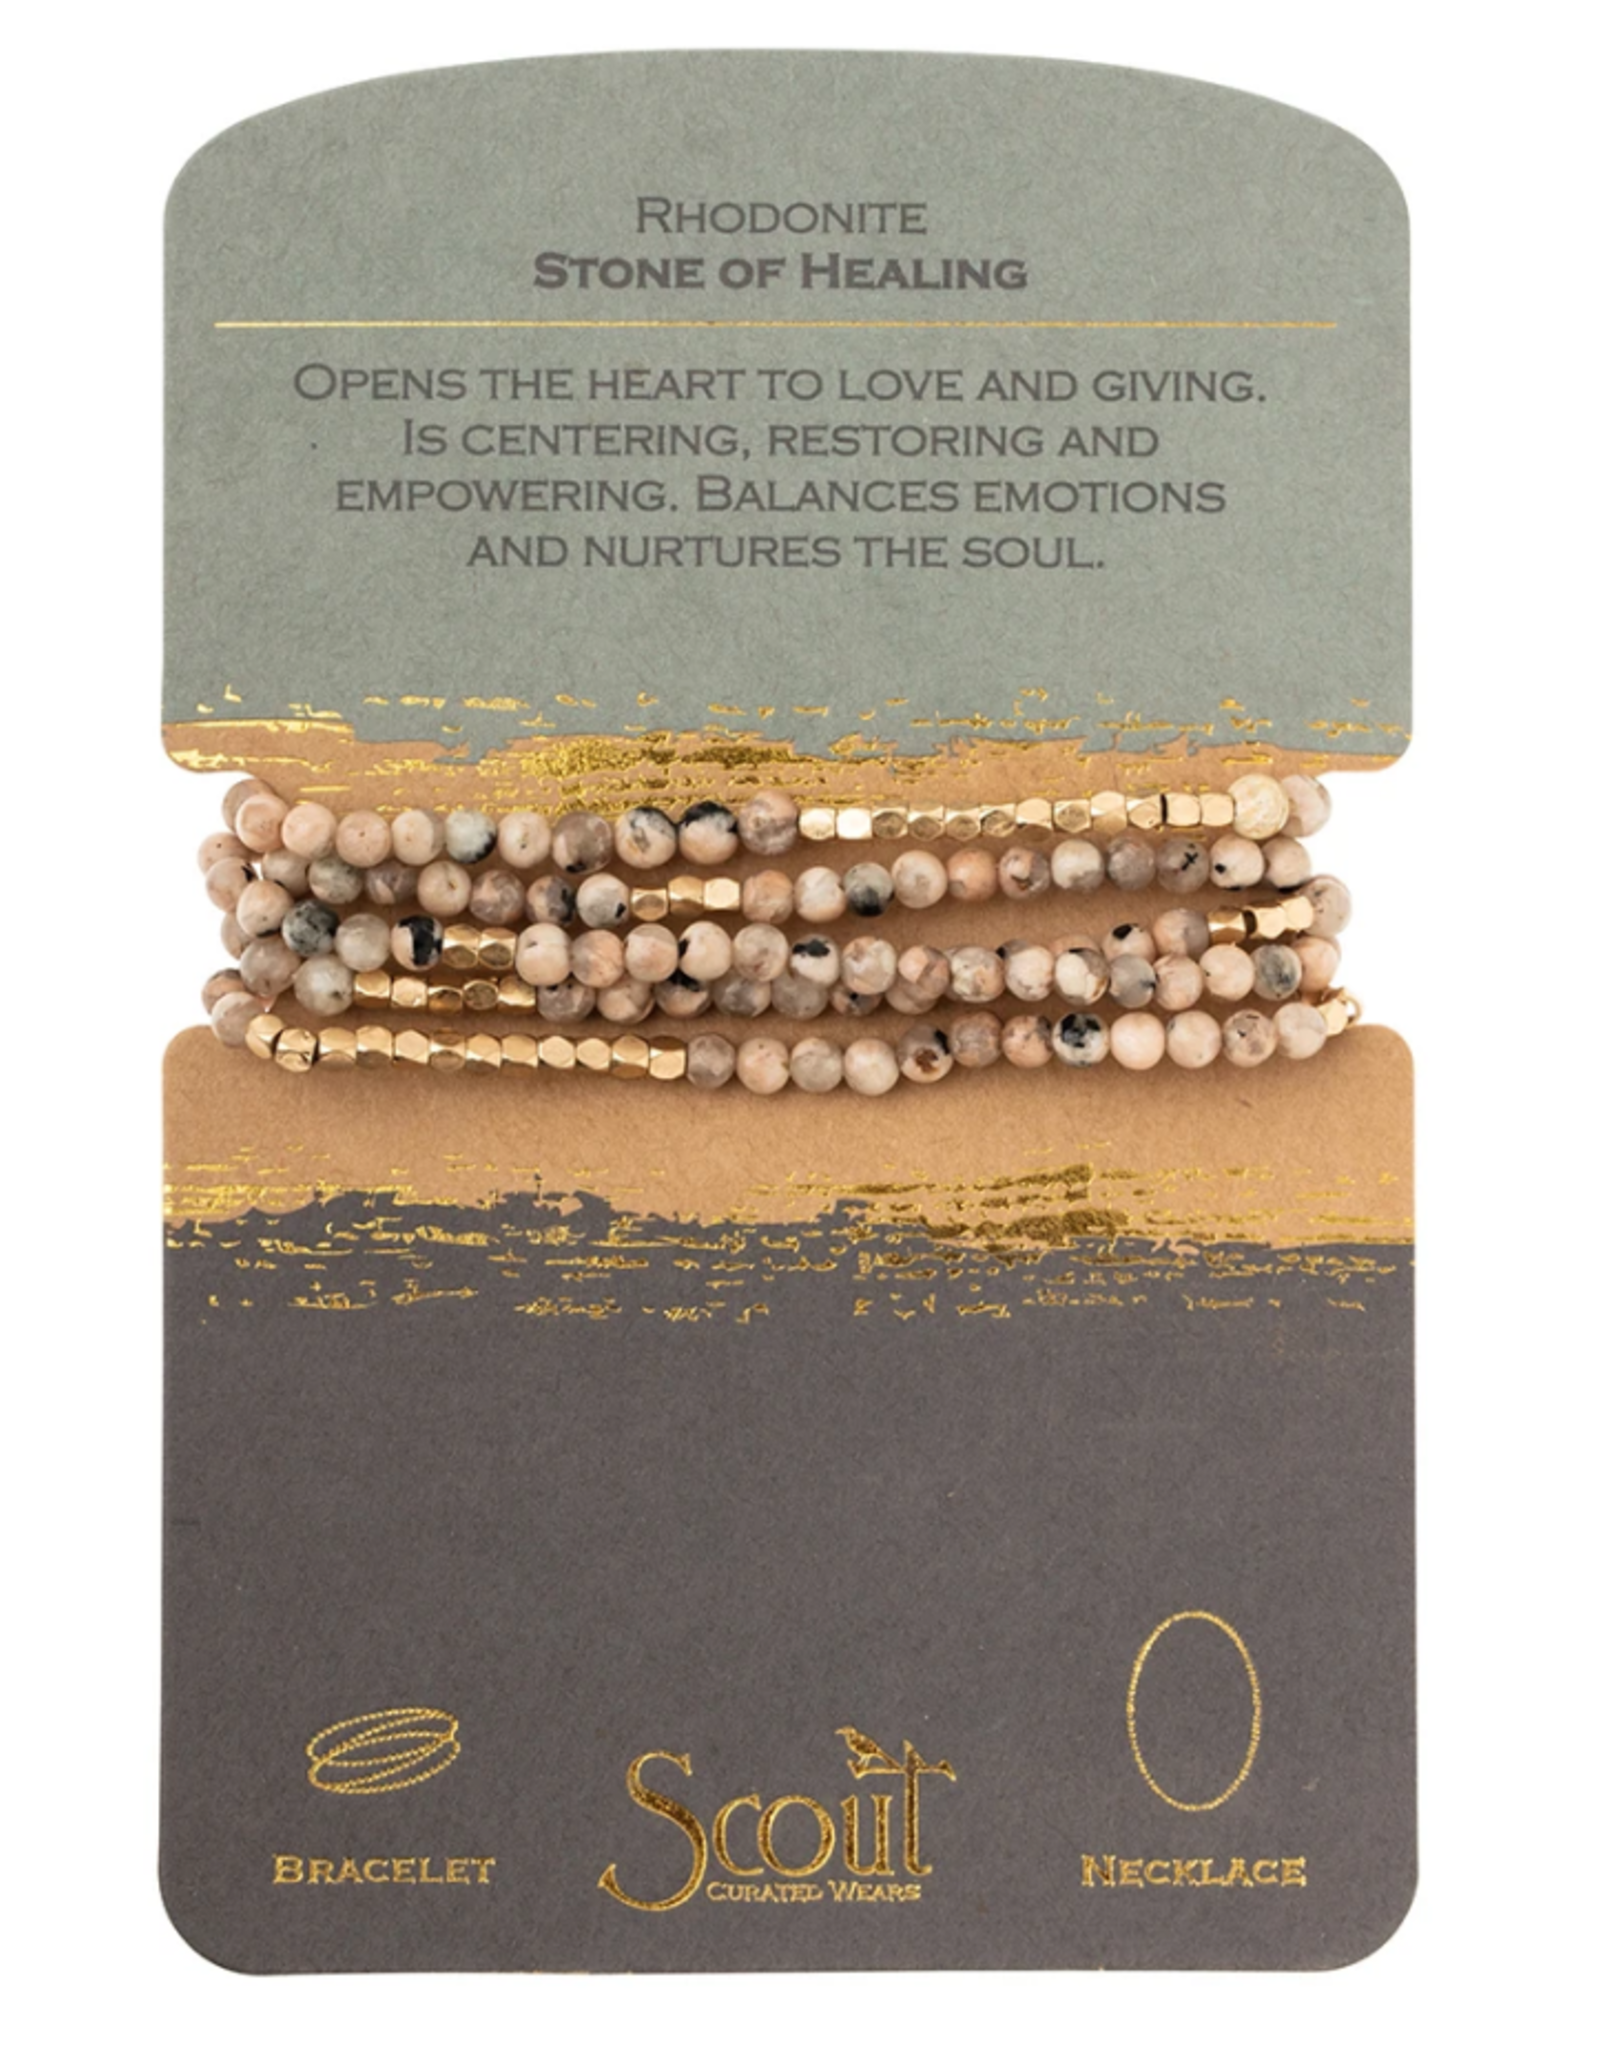 Bracelet Necklace Stone of Healing Rhodonite